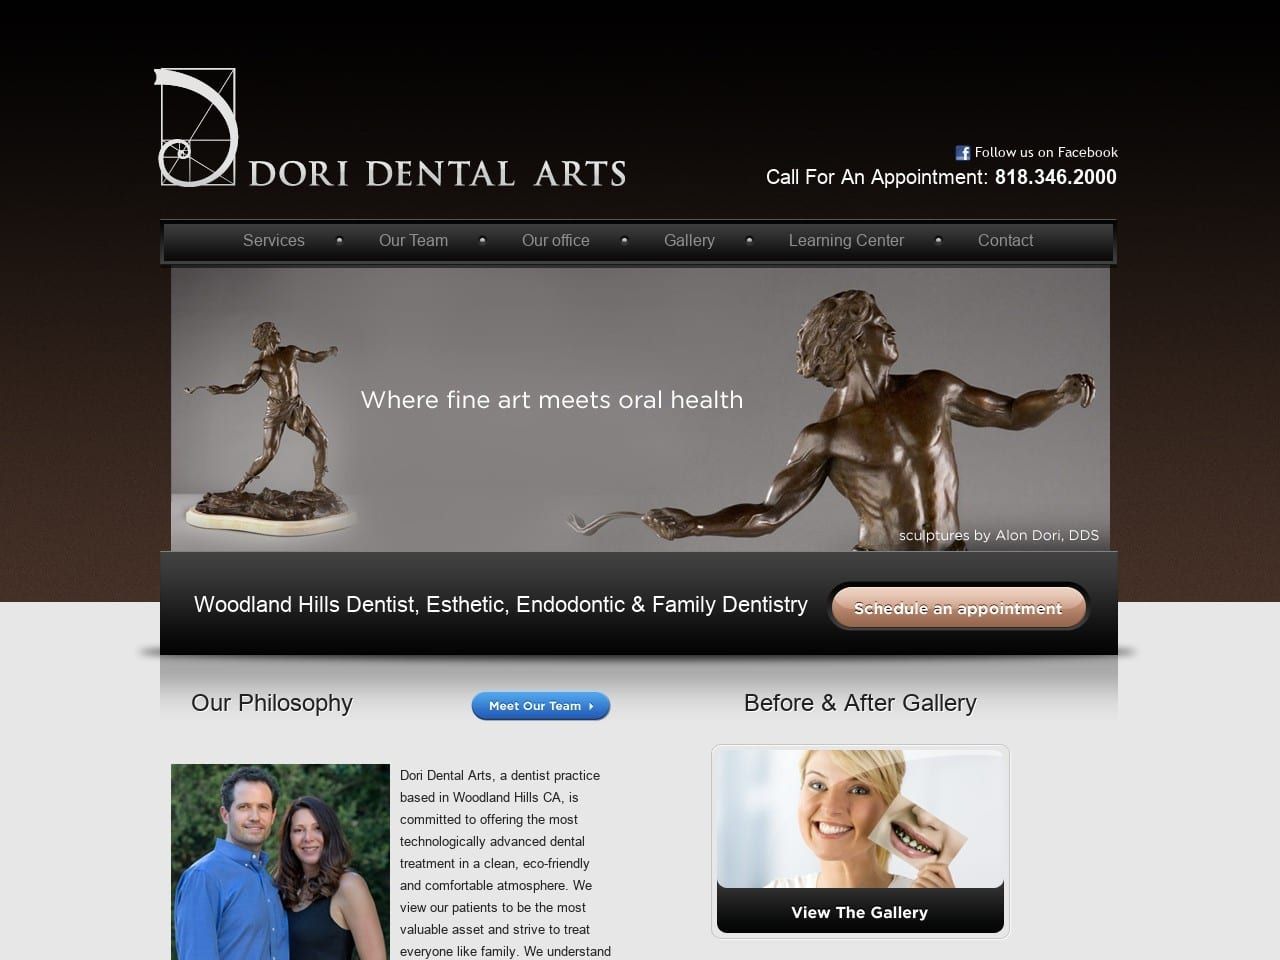 Dori Dental Arts Website Screenshot from doridentalarts.com